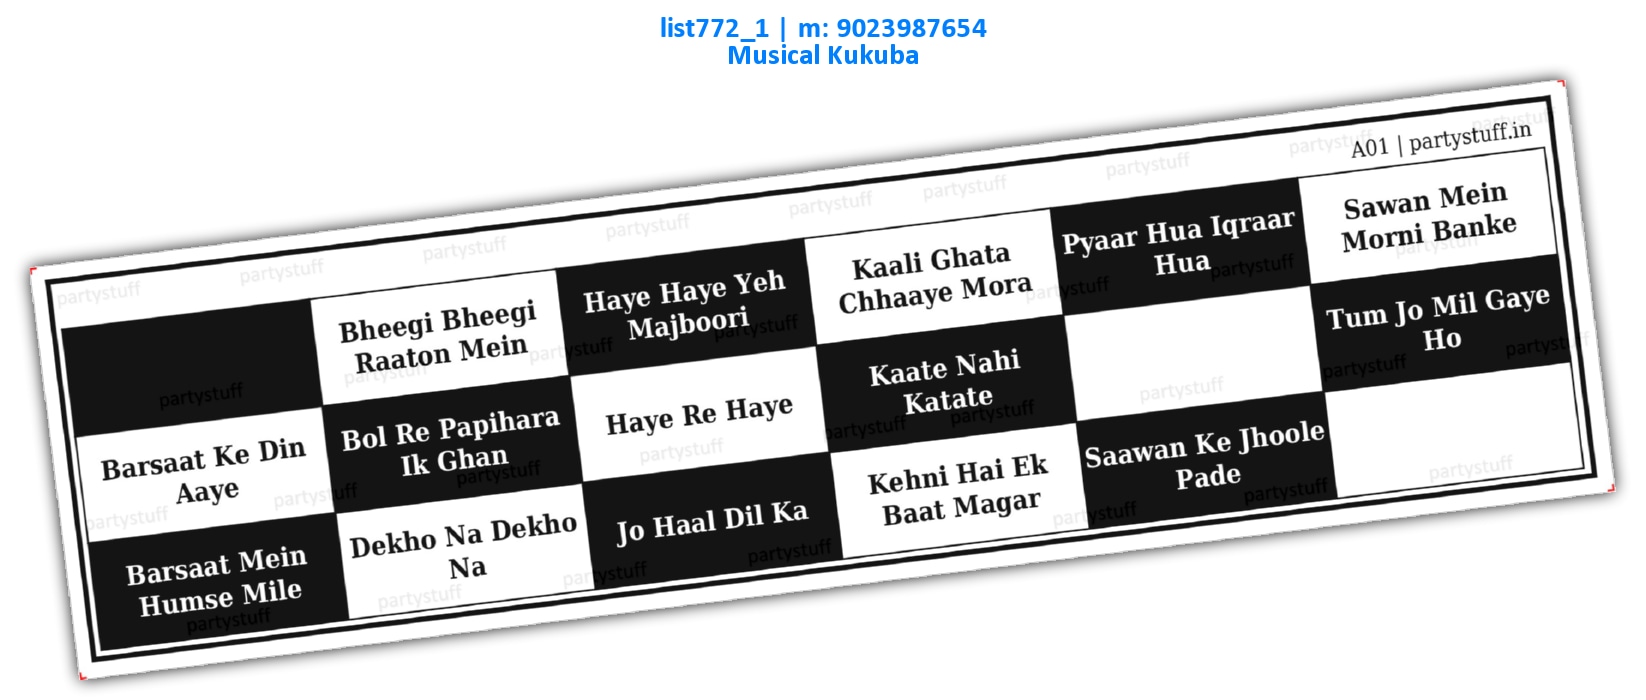 Rain Songs Bollywood | Printed list772_1 Printed Tambola Housie